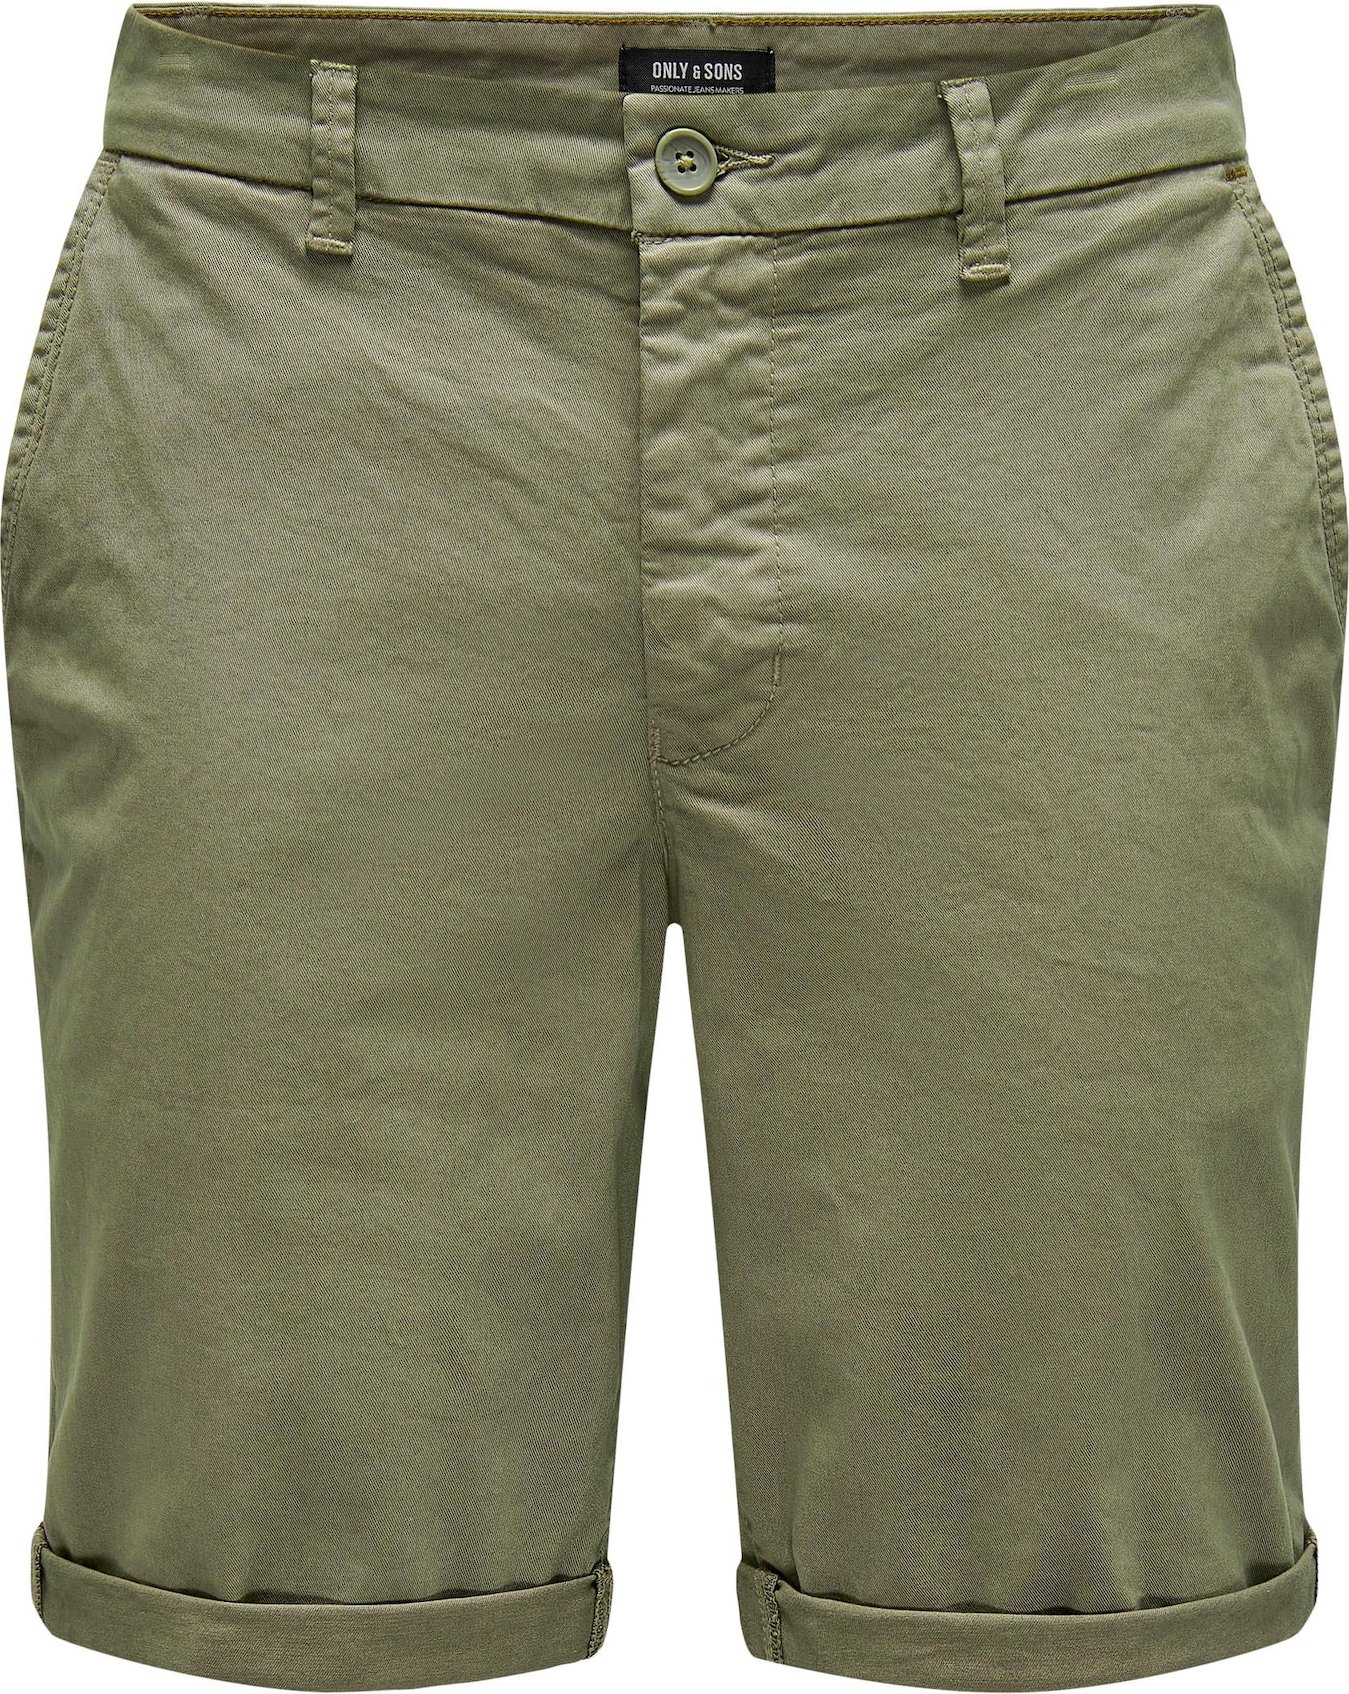 Only & Sons Chino kalhoty 'Peter' khaki